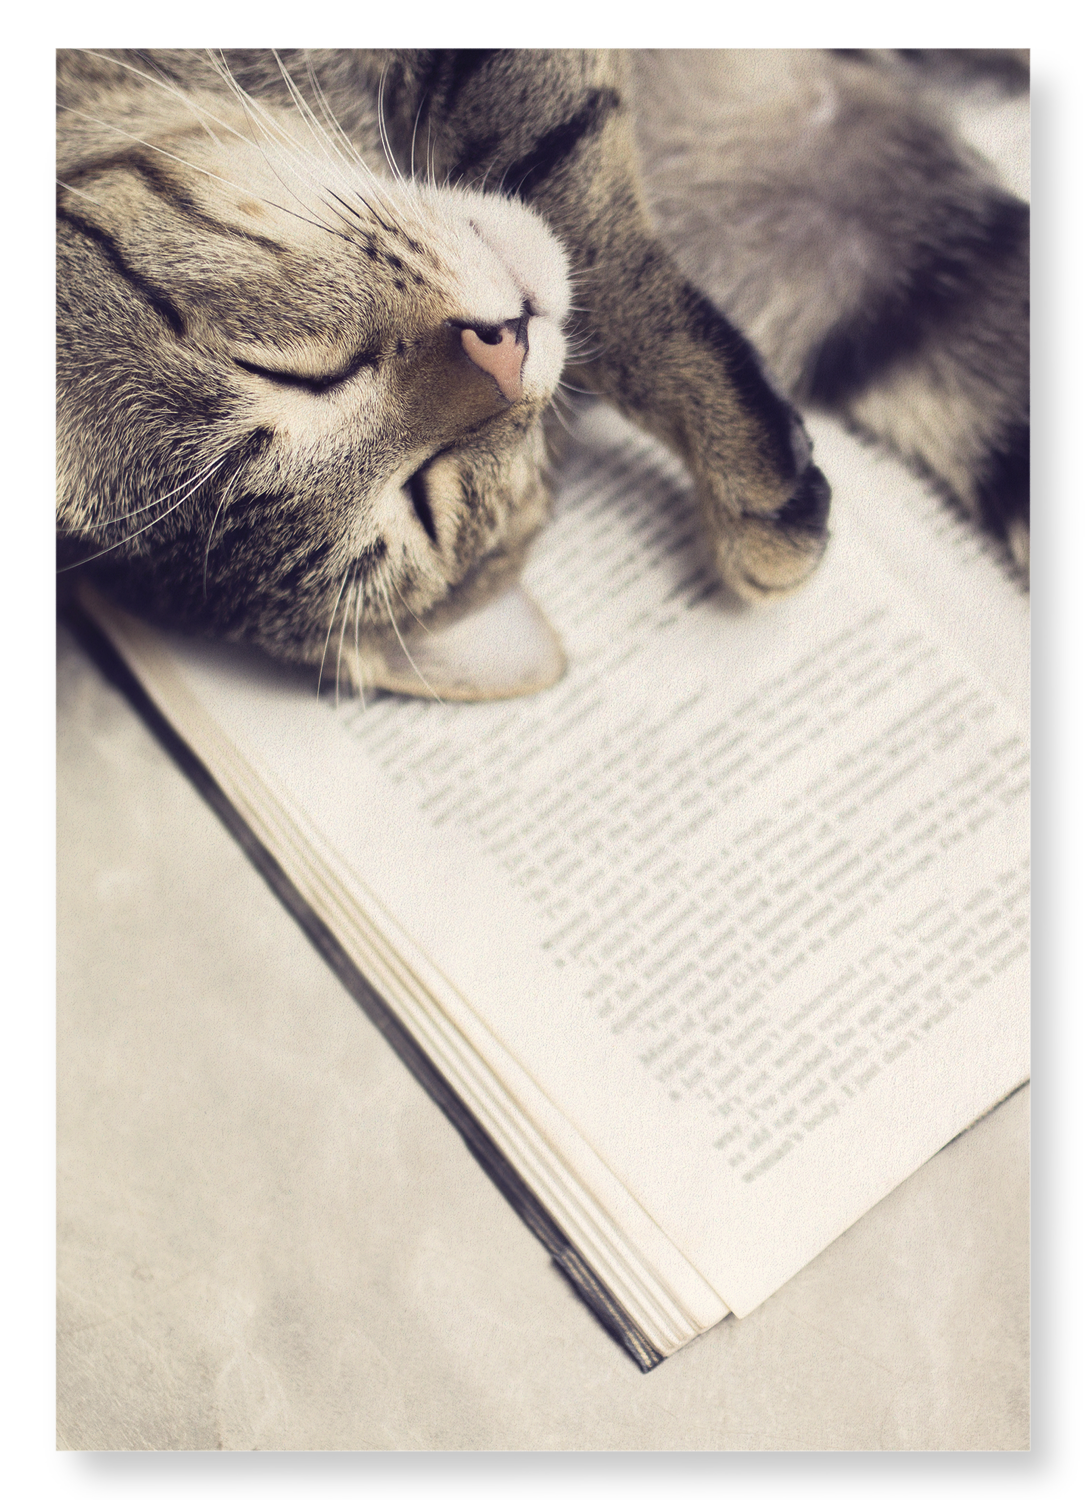 CAT AND BOOK: Photo Art Print